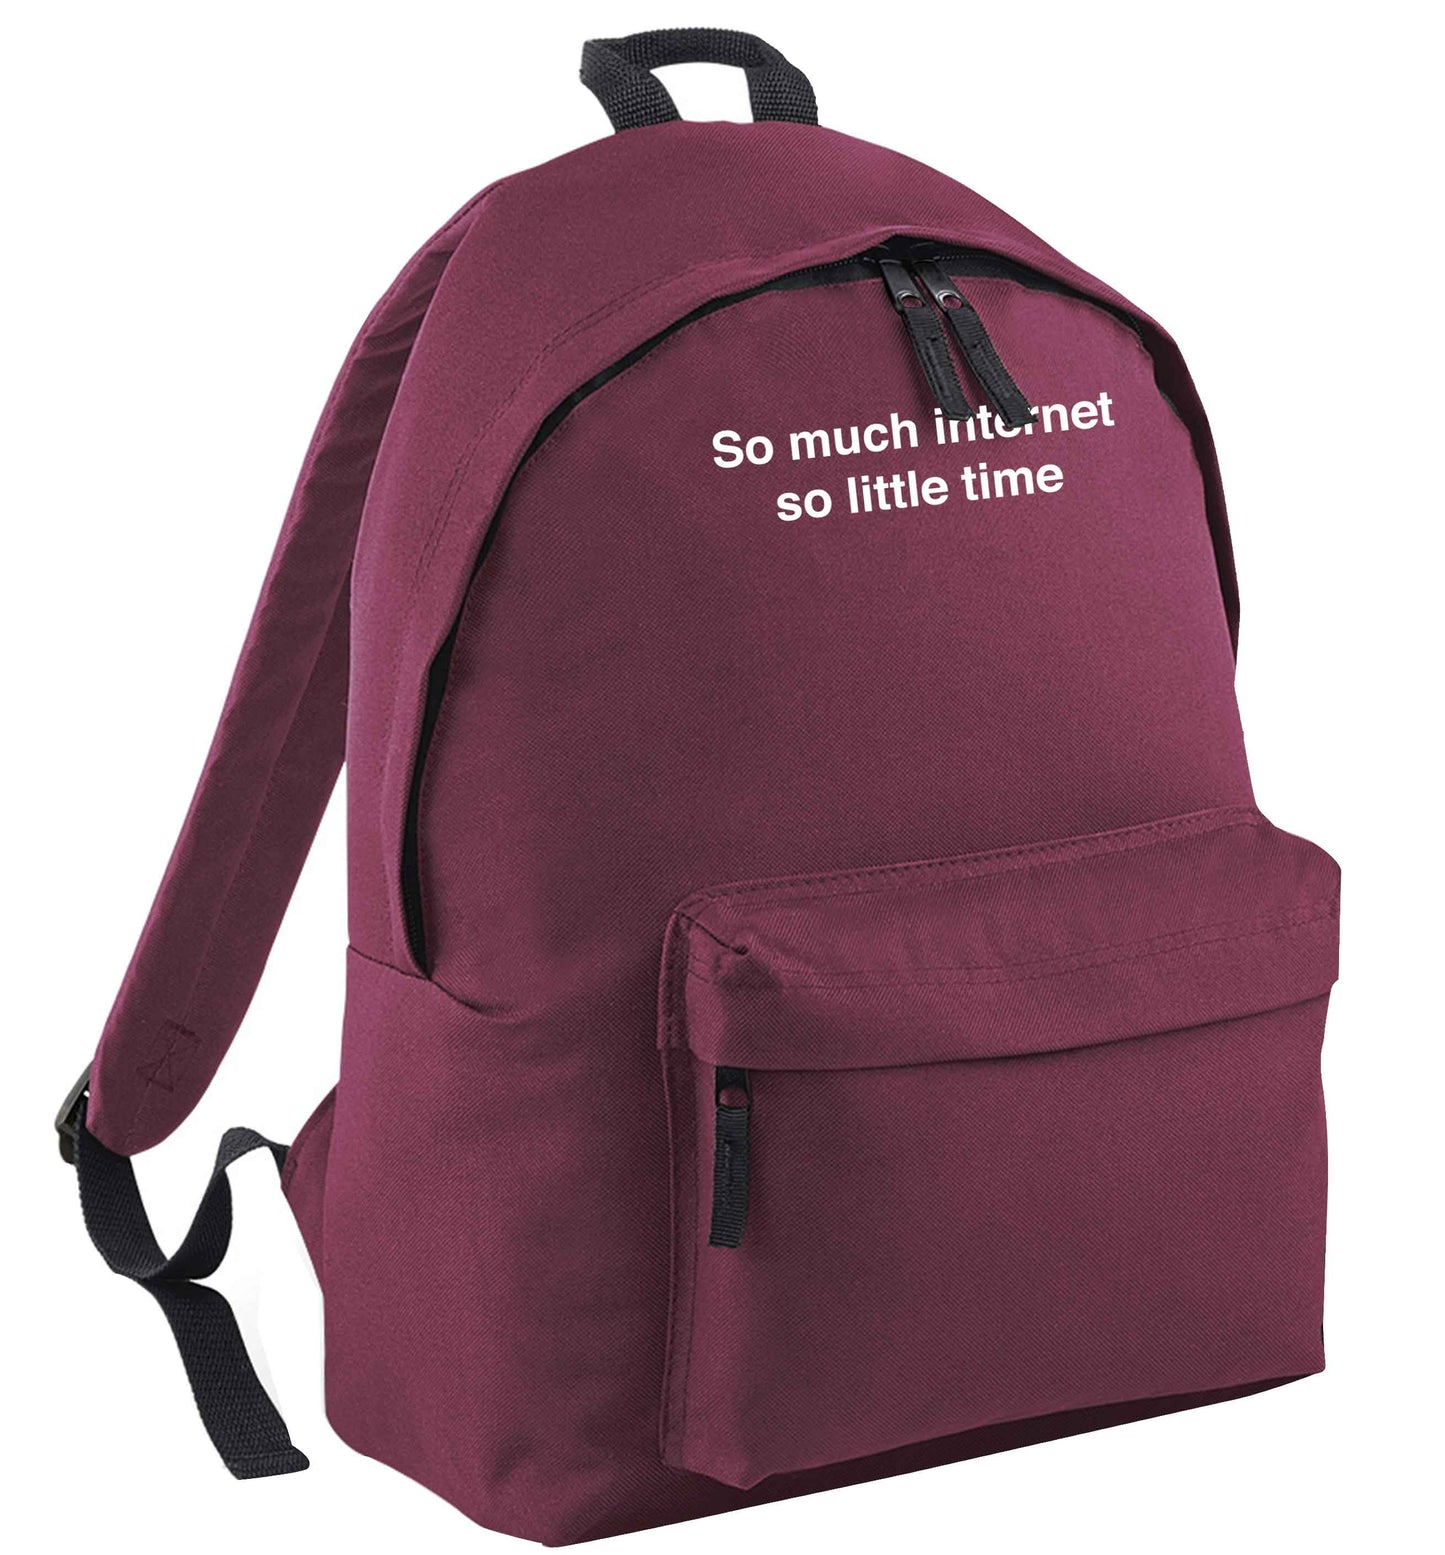 So much internet so little time | Children's backpack